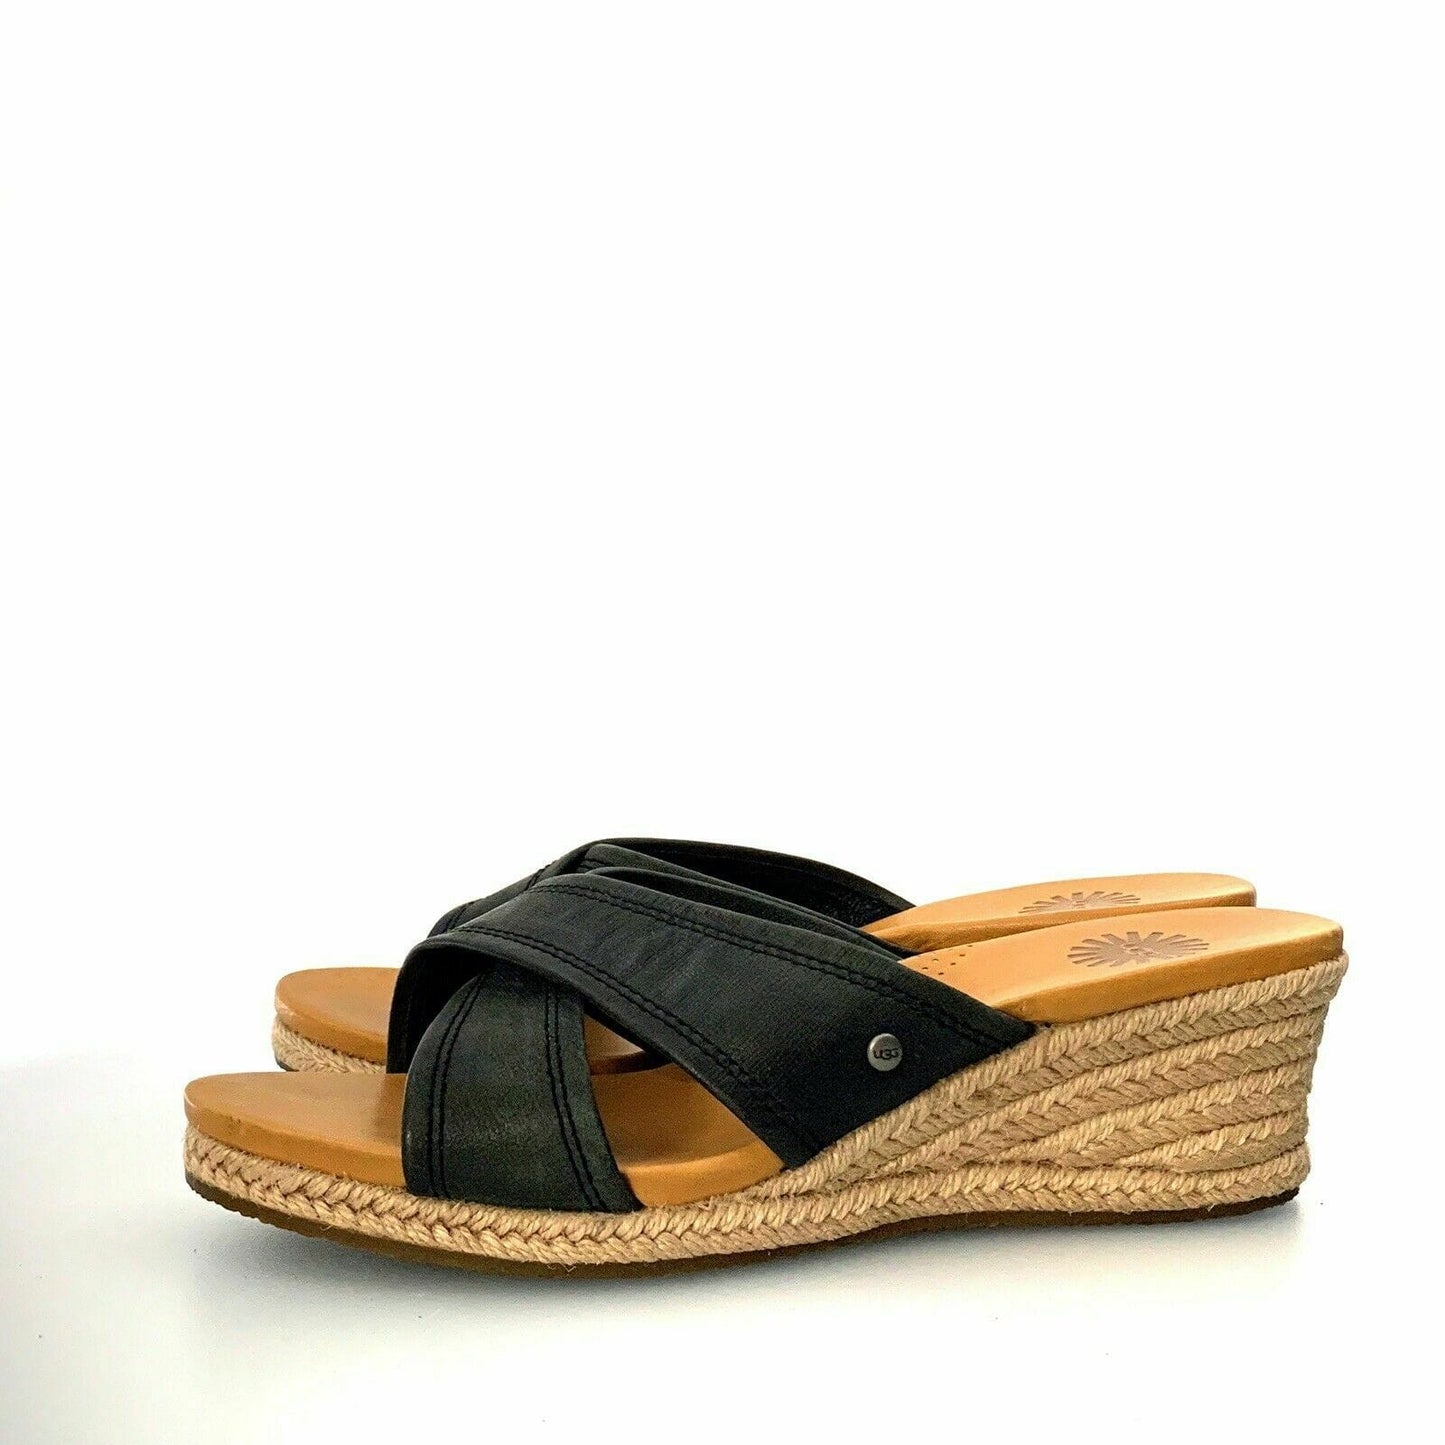 UGG Australia Womens “Gwyn” Size 7.5 Black Wedge Leather Sandals Slides